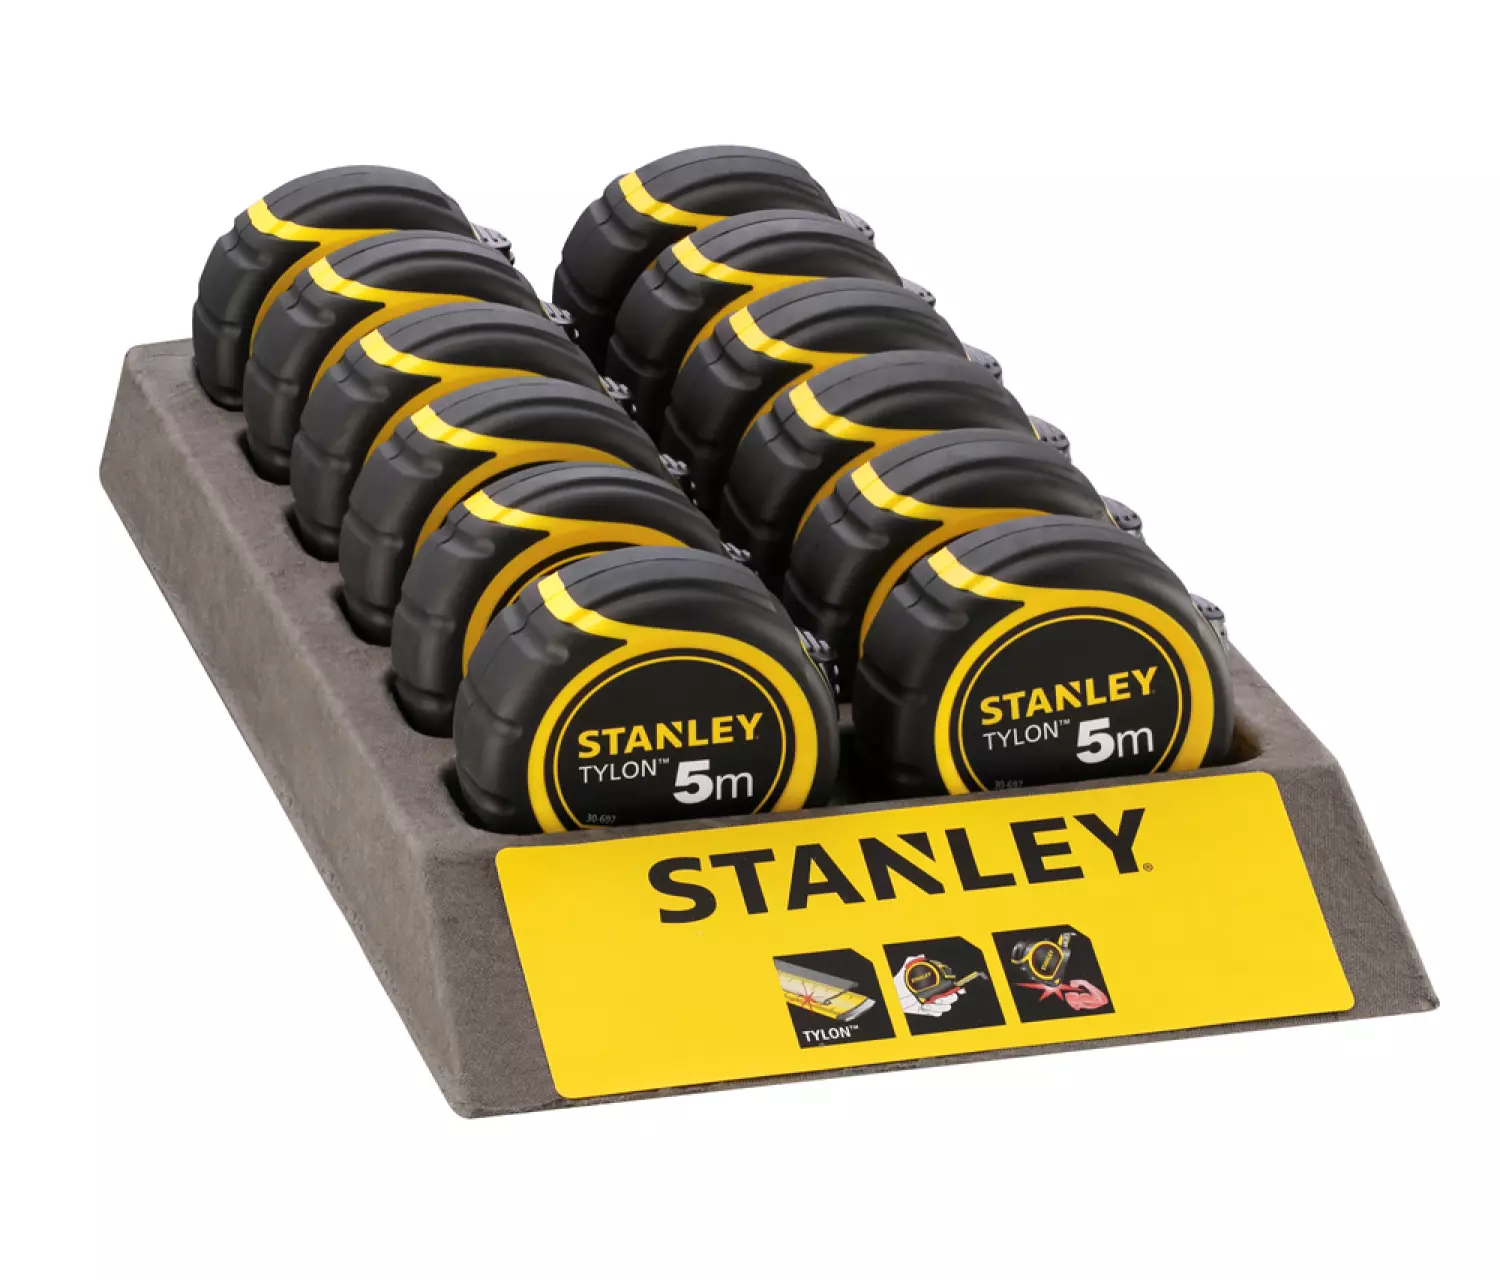 Stanley 1-30-697 Tylon Rolmaat - 5m x 19mm-image